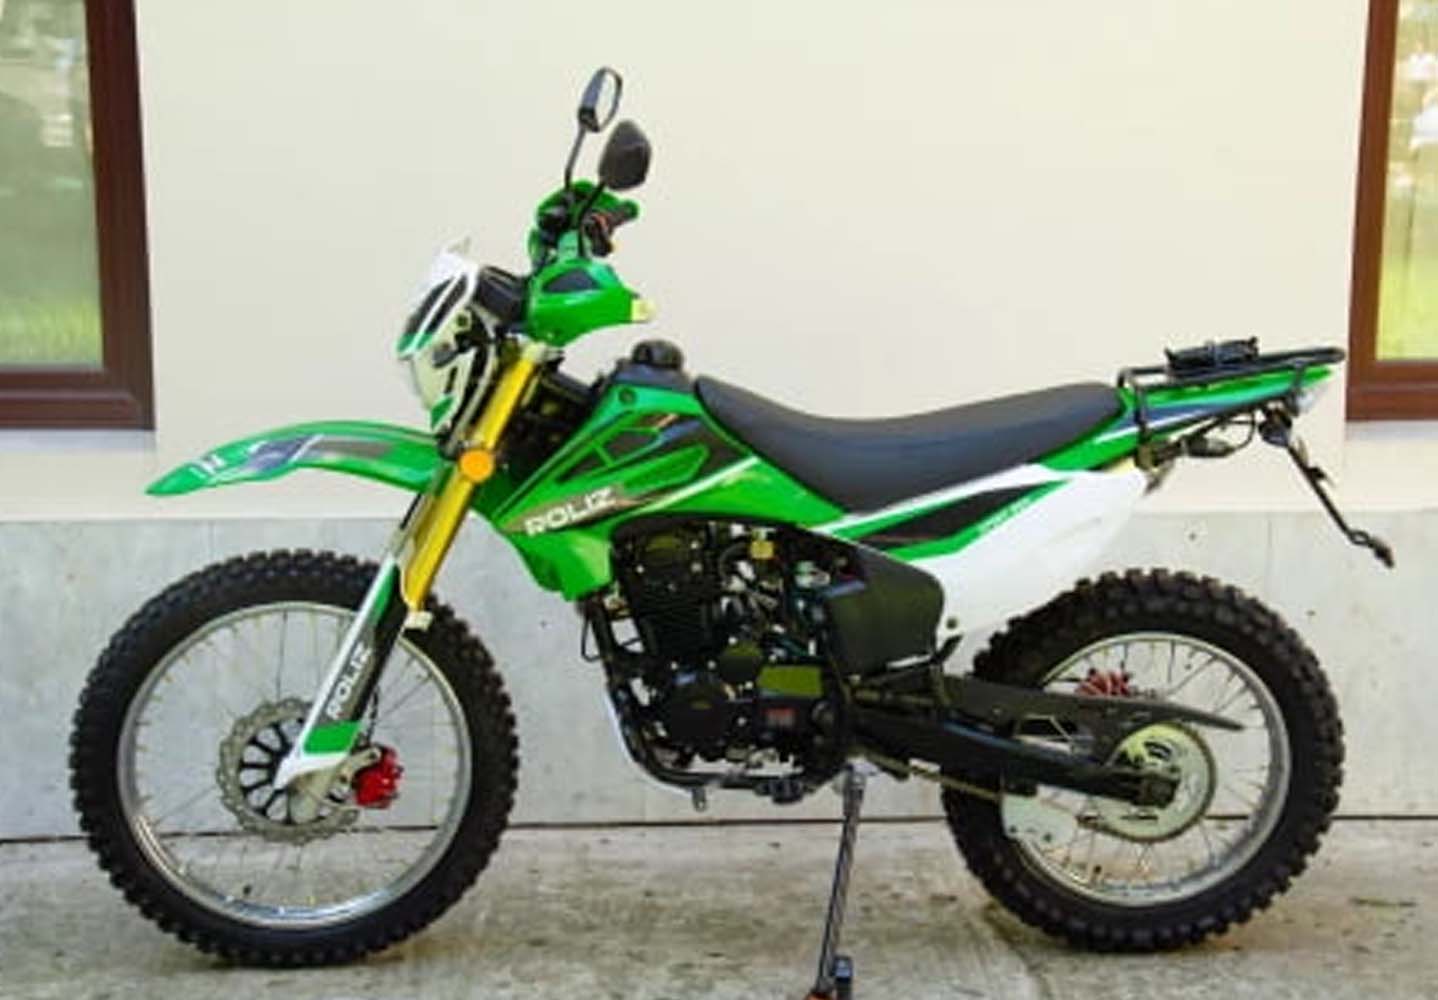 Sport 003 250. Мотоцикл Roliz Sport-003 ПТС. Roliz 250 мотоцикл. Sport 003 зеленый. Roliz эндуро.